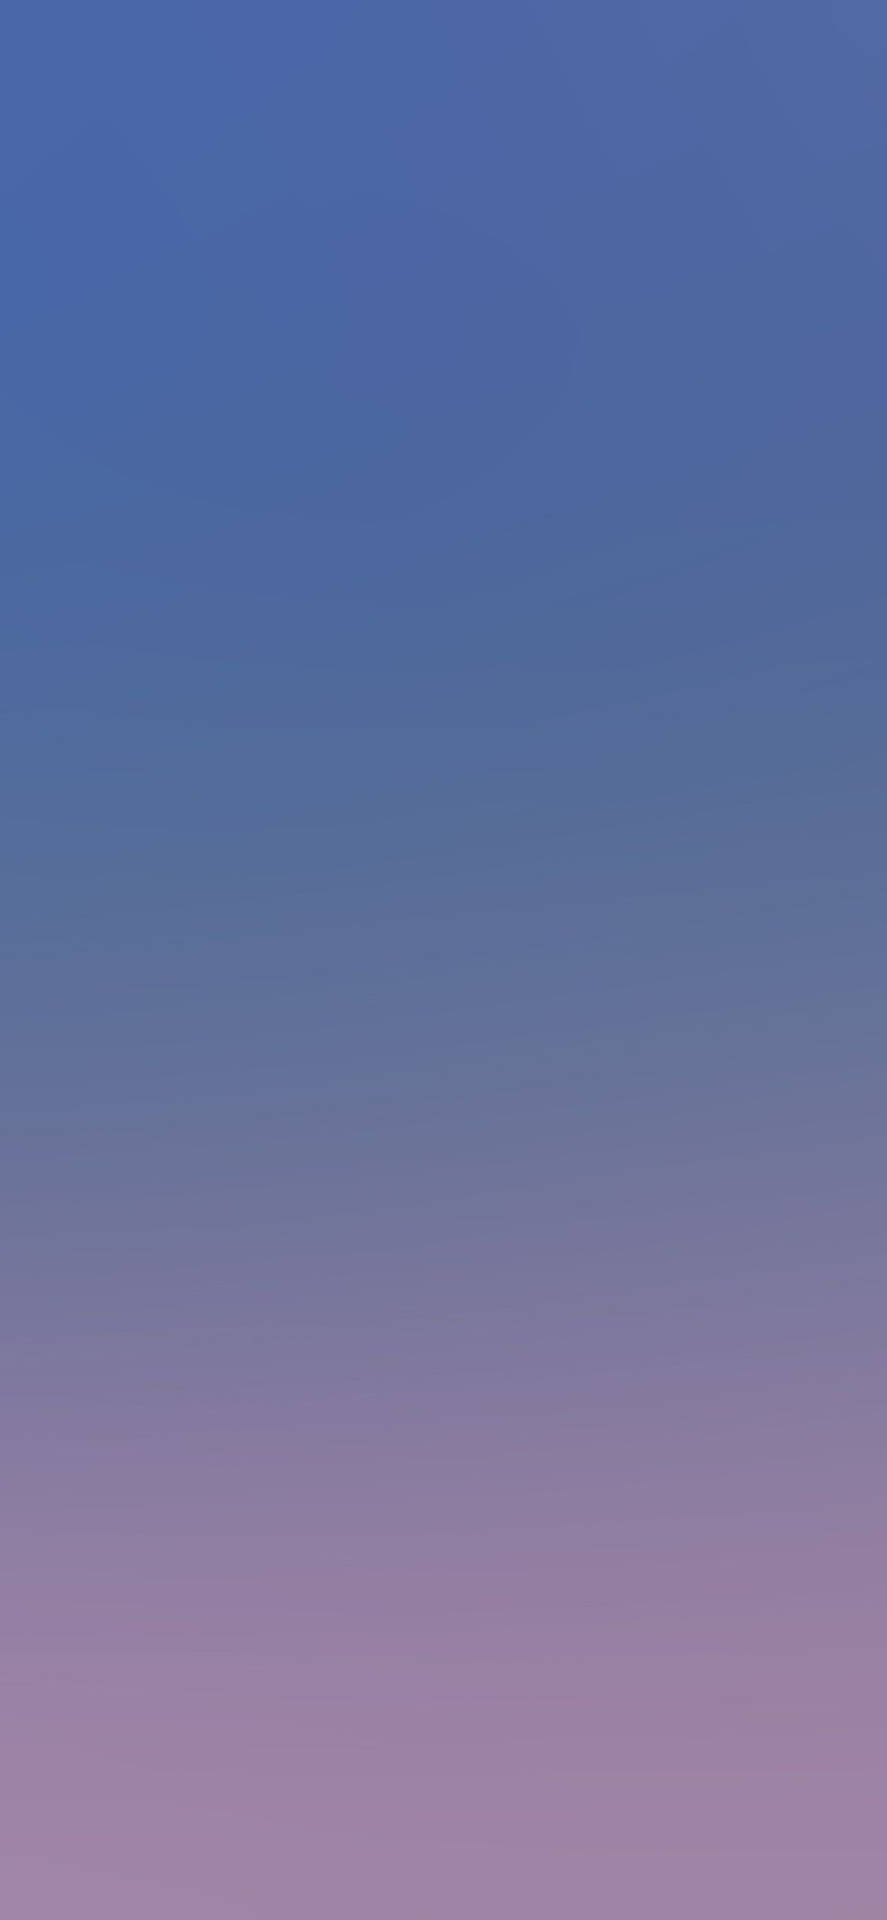 Gradient Of Blue To Light Purple iPhone Wallpaper